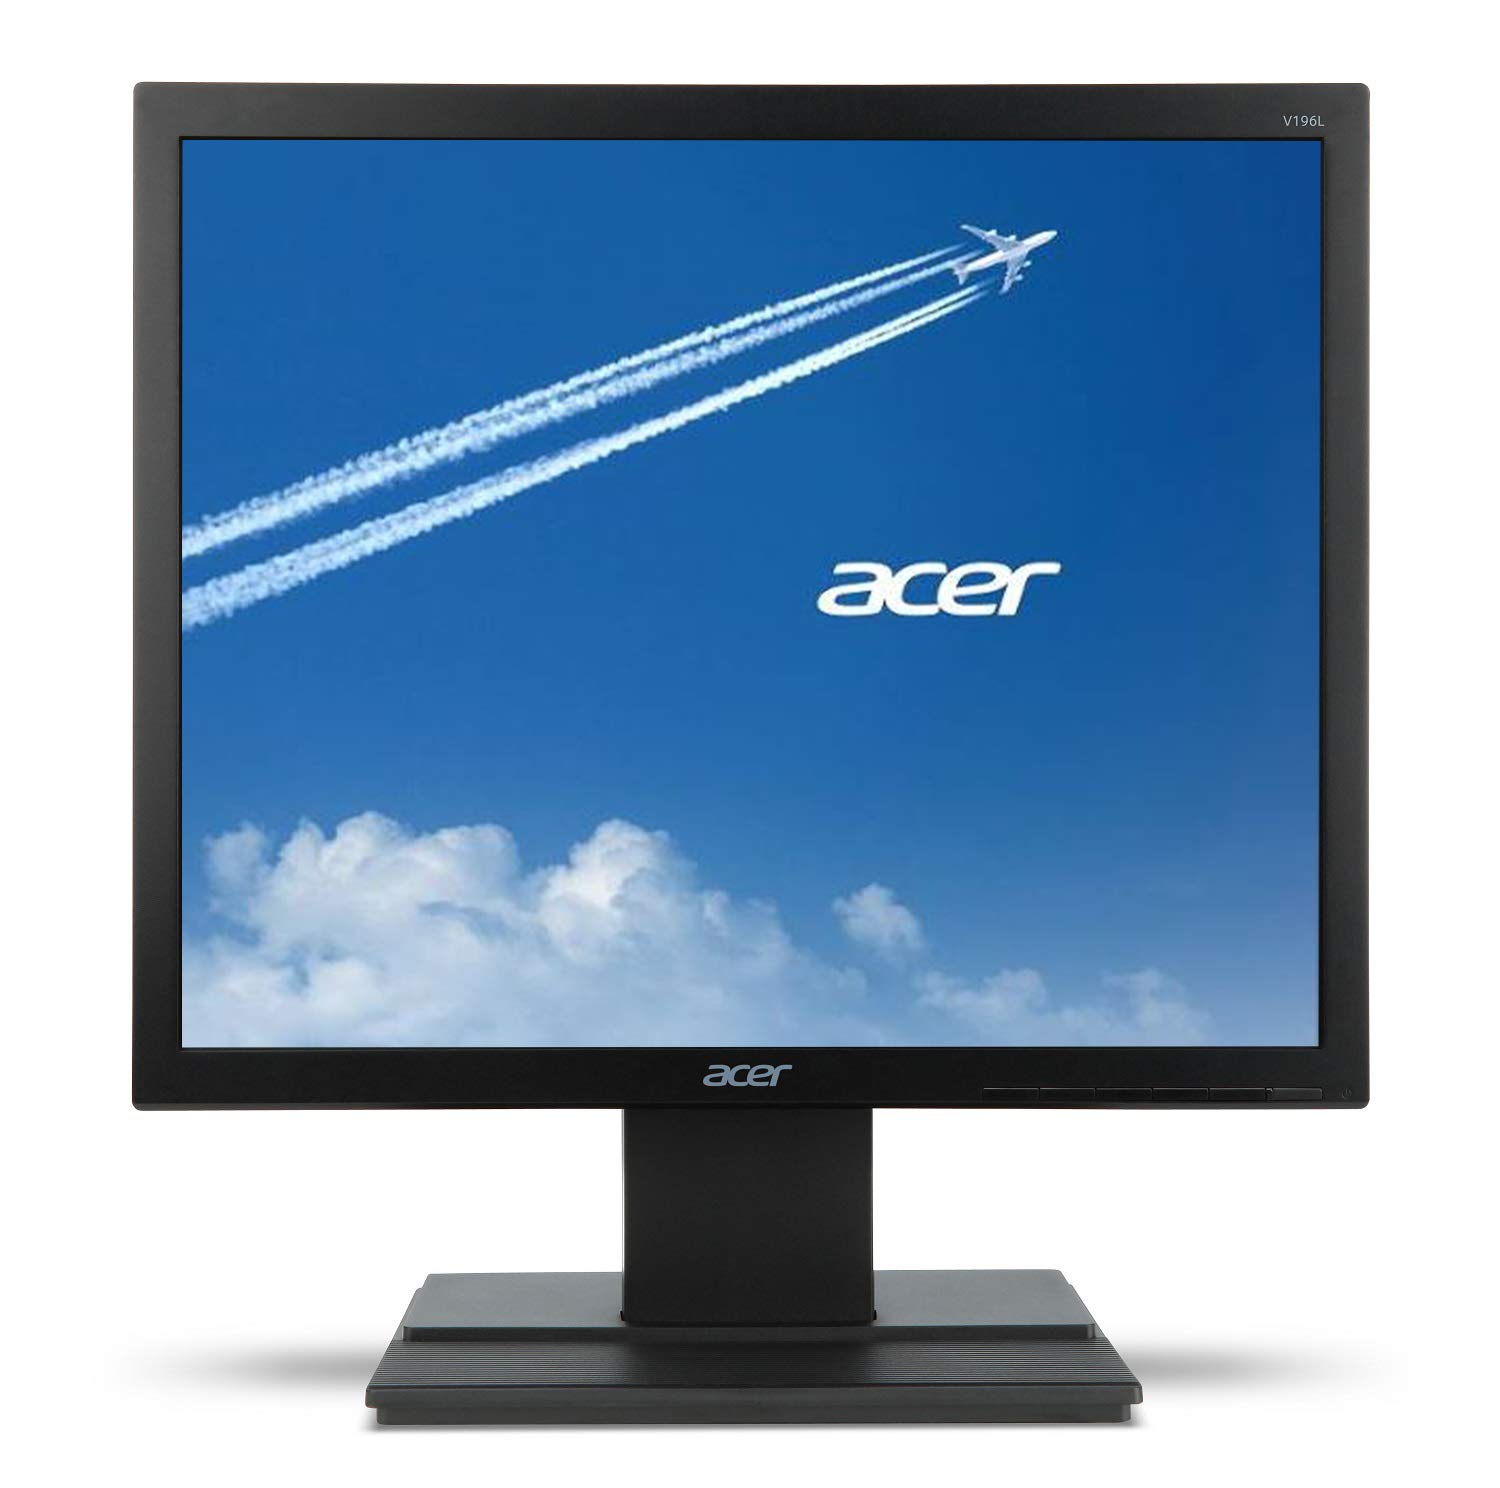 Acer V196L Bb 19' HD (1280 x 1024) IPS-Monitor (VGA-Anschluss)